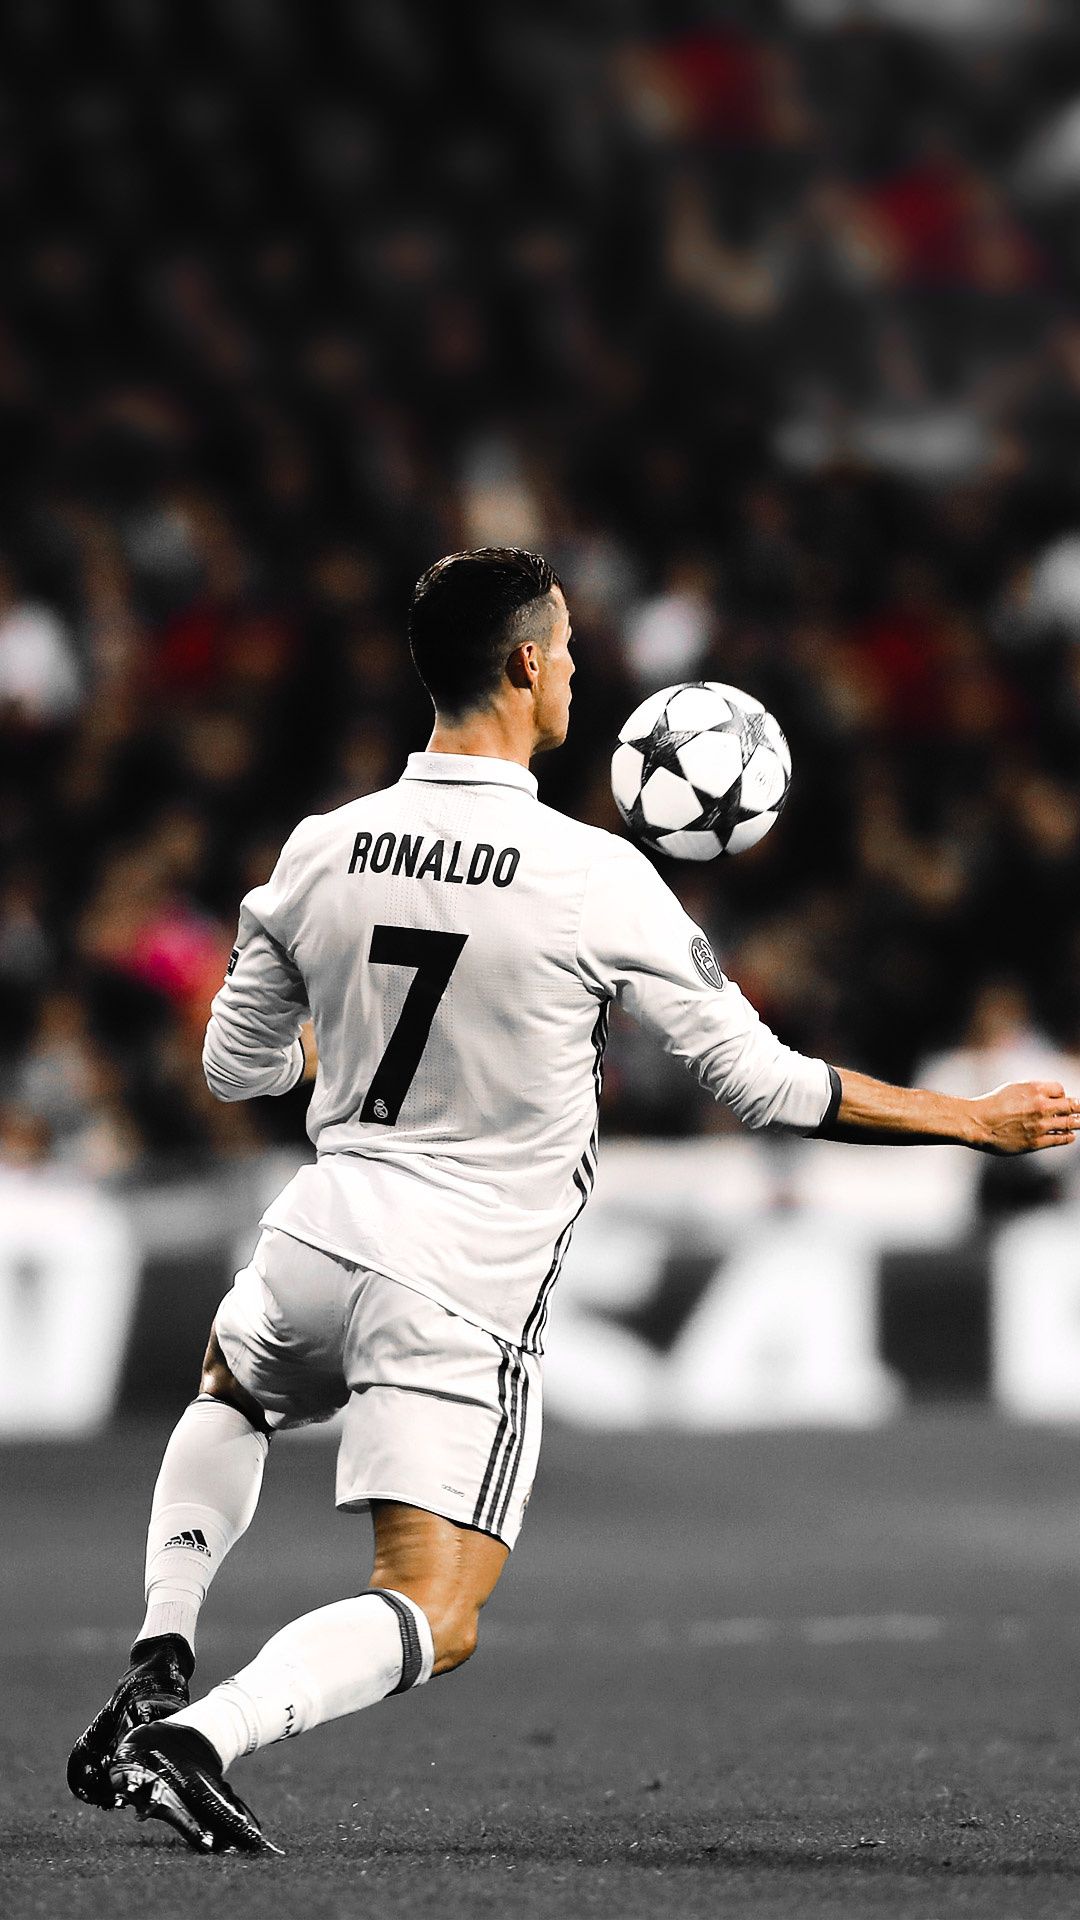 Cristiano Ronaldo k Wallpaper For Android